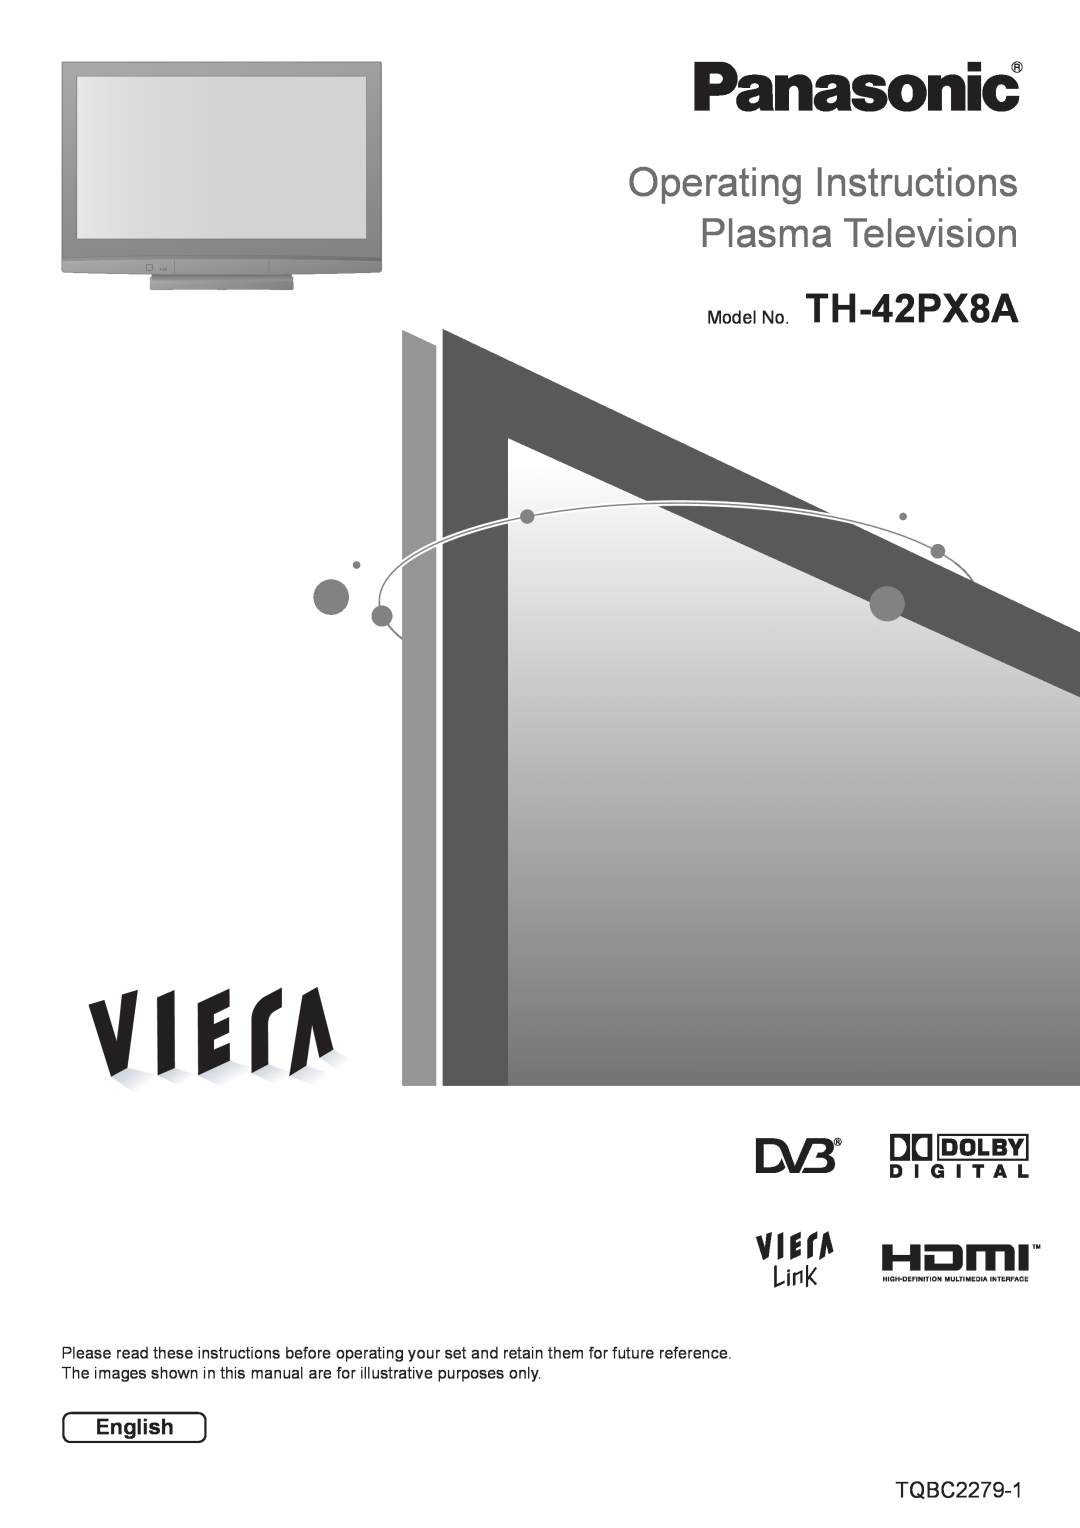 Panasonic TH-42PX8A manual English, TQBC2279-1, Operating Instructions Plasma Television 